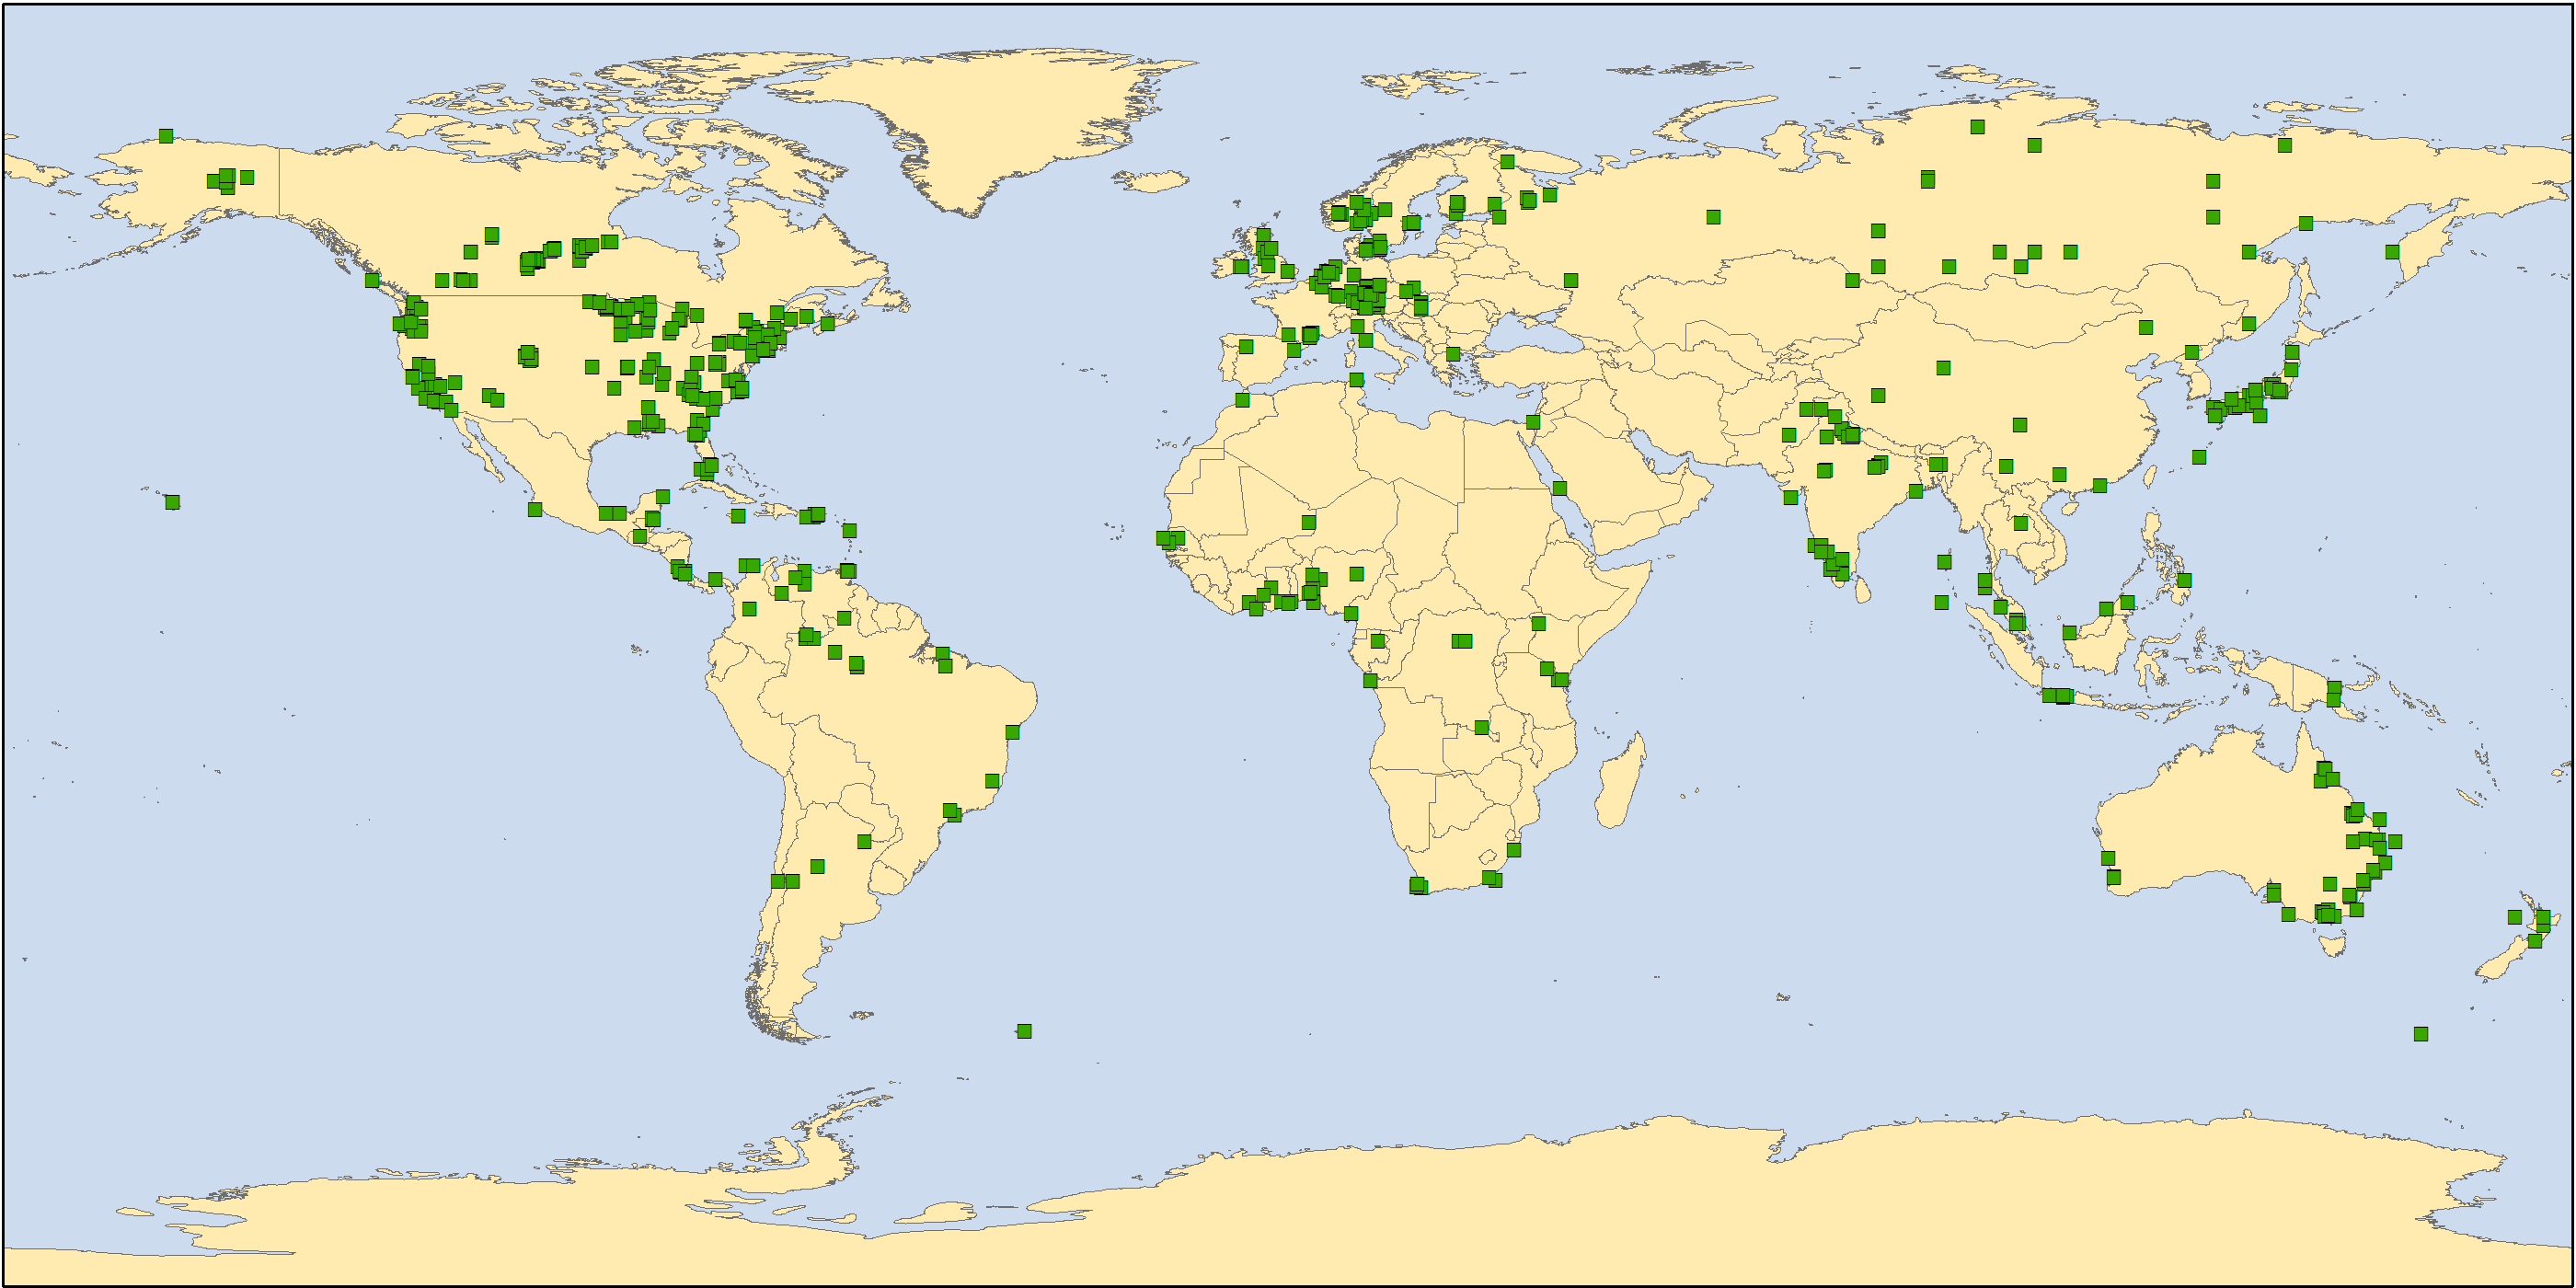 global distribution of data in database